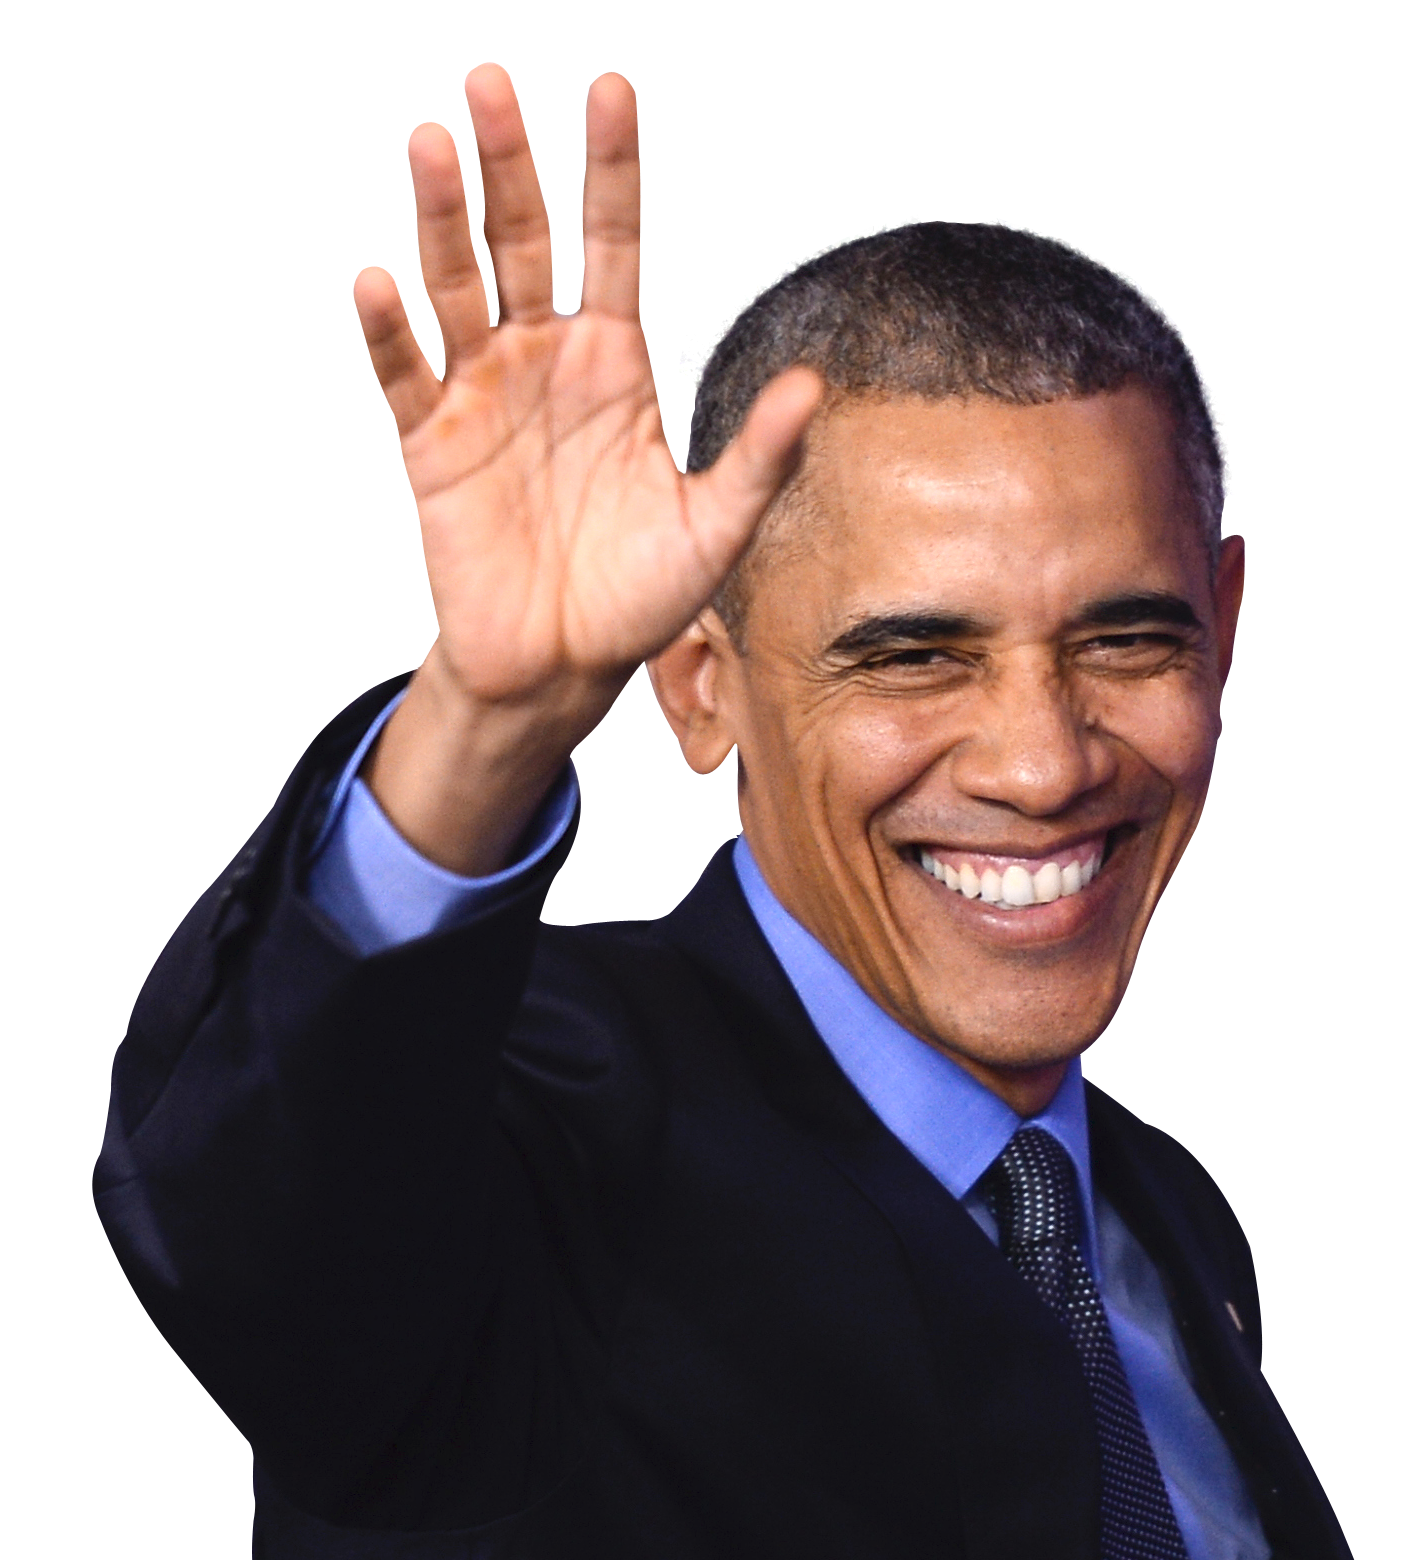 Barack Waving Hand Obama PNG File HD PNG Image